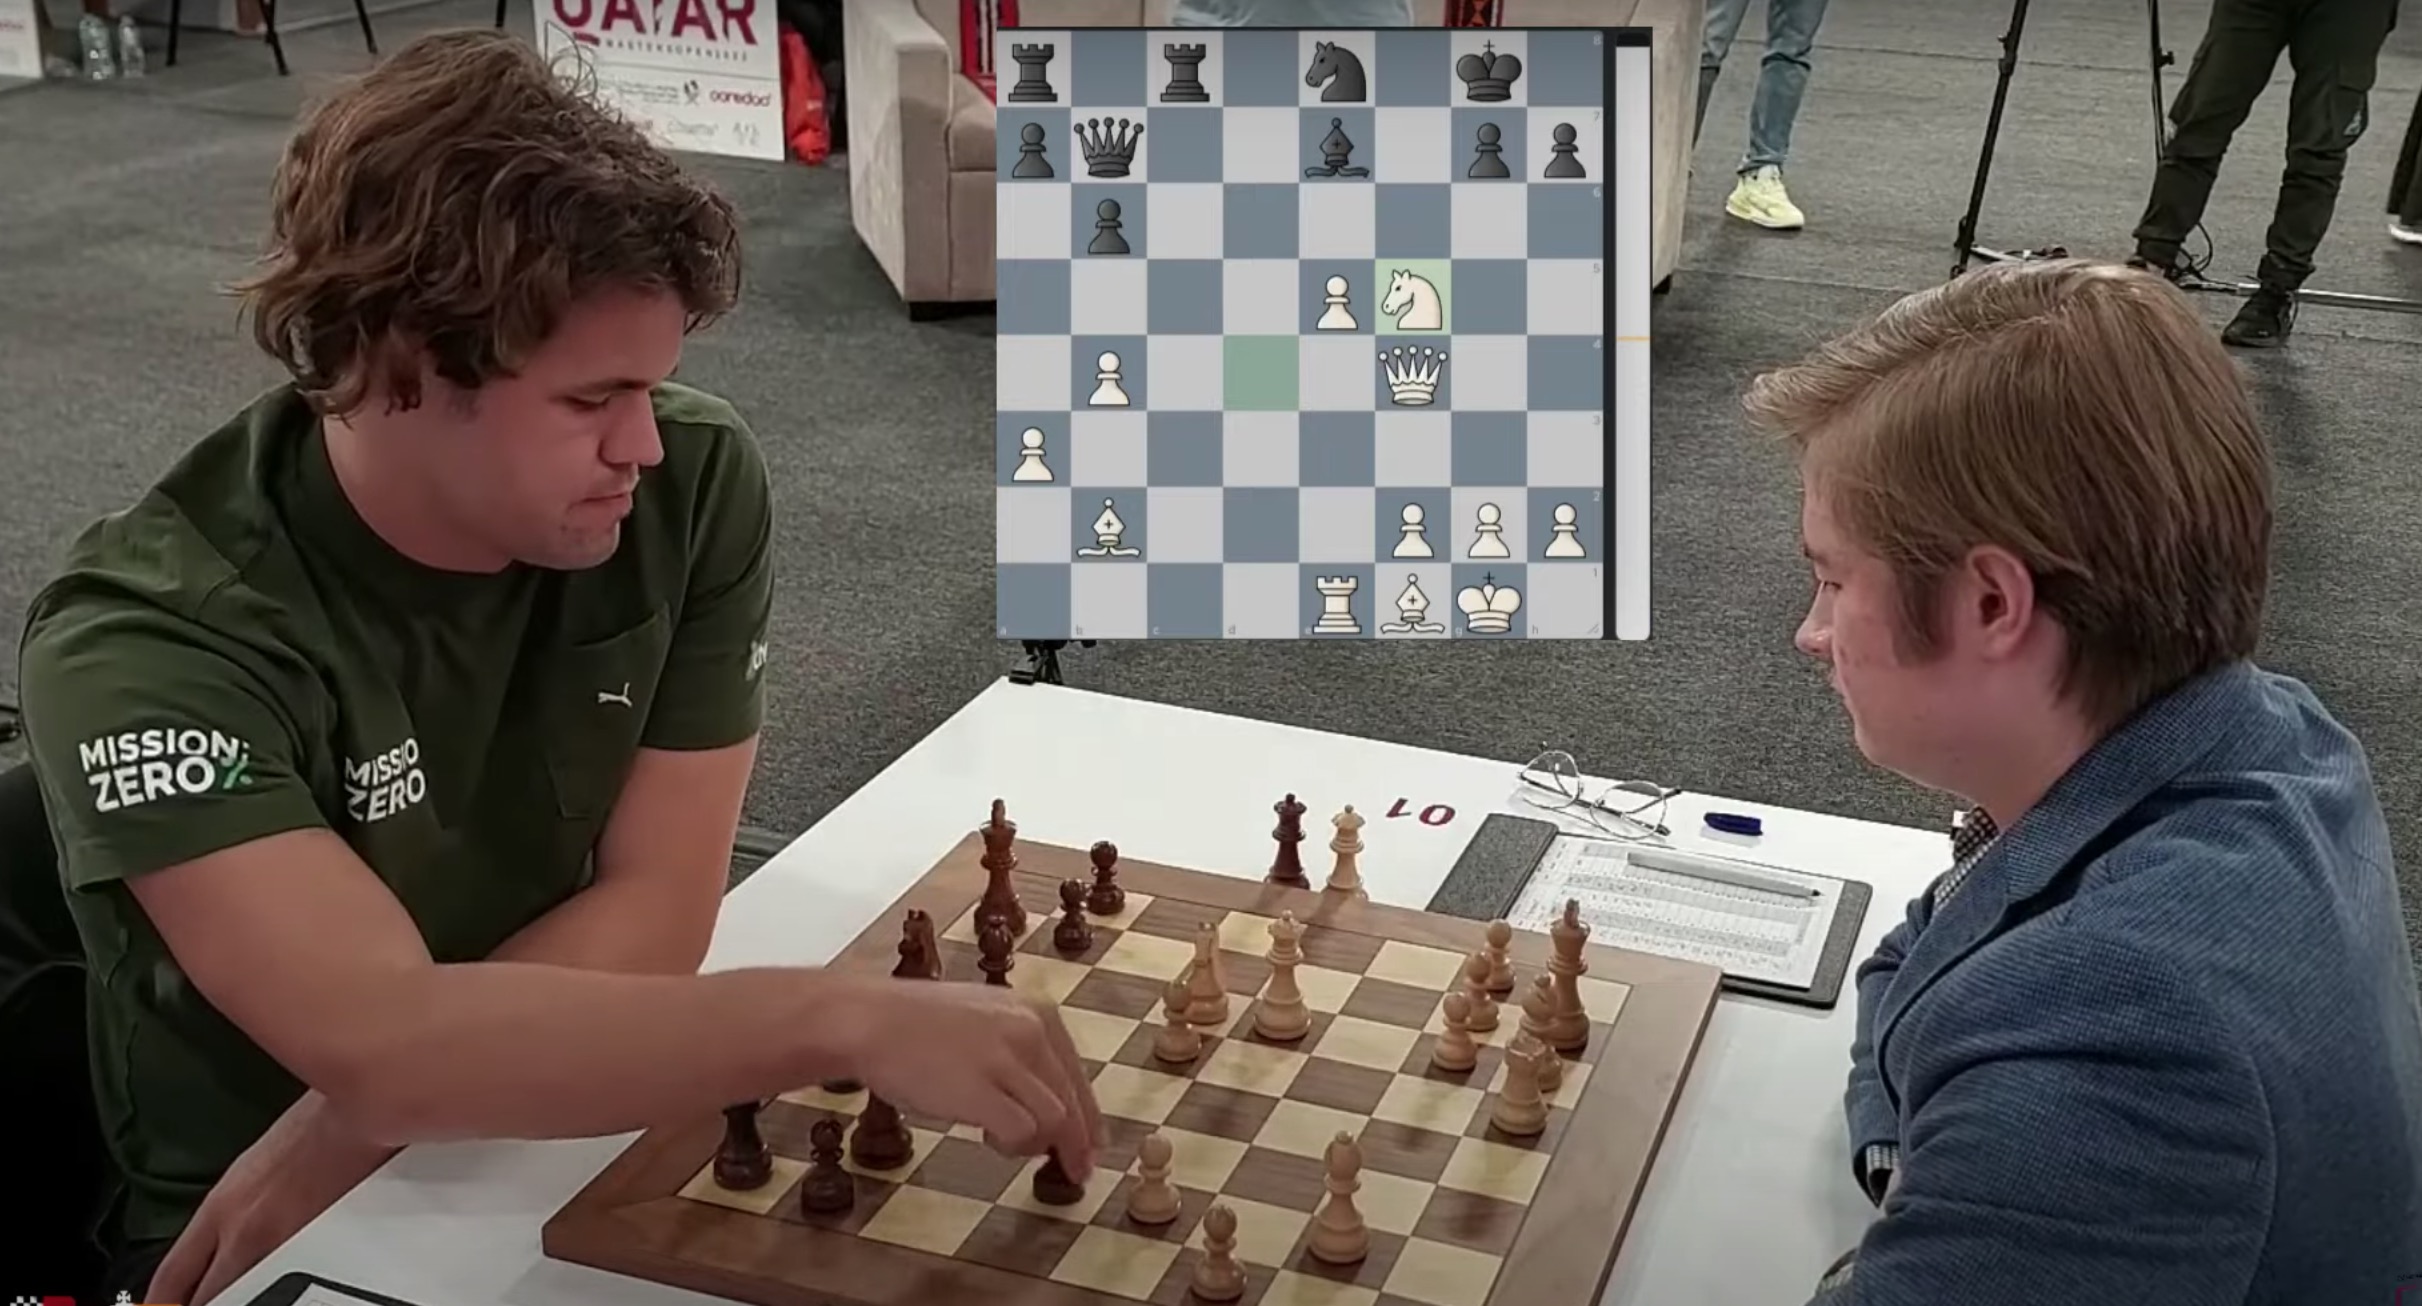 Magnus Carlsen Responds To Shocking Upset By Once Again Kinda